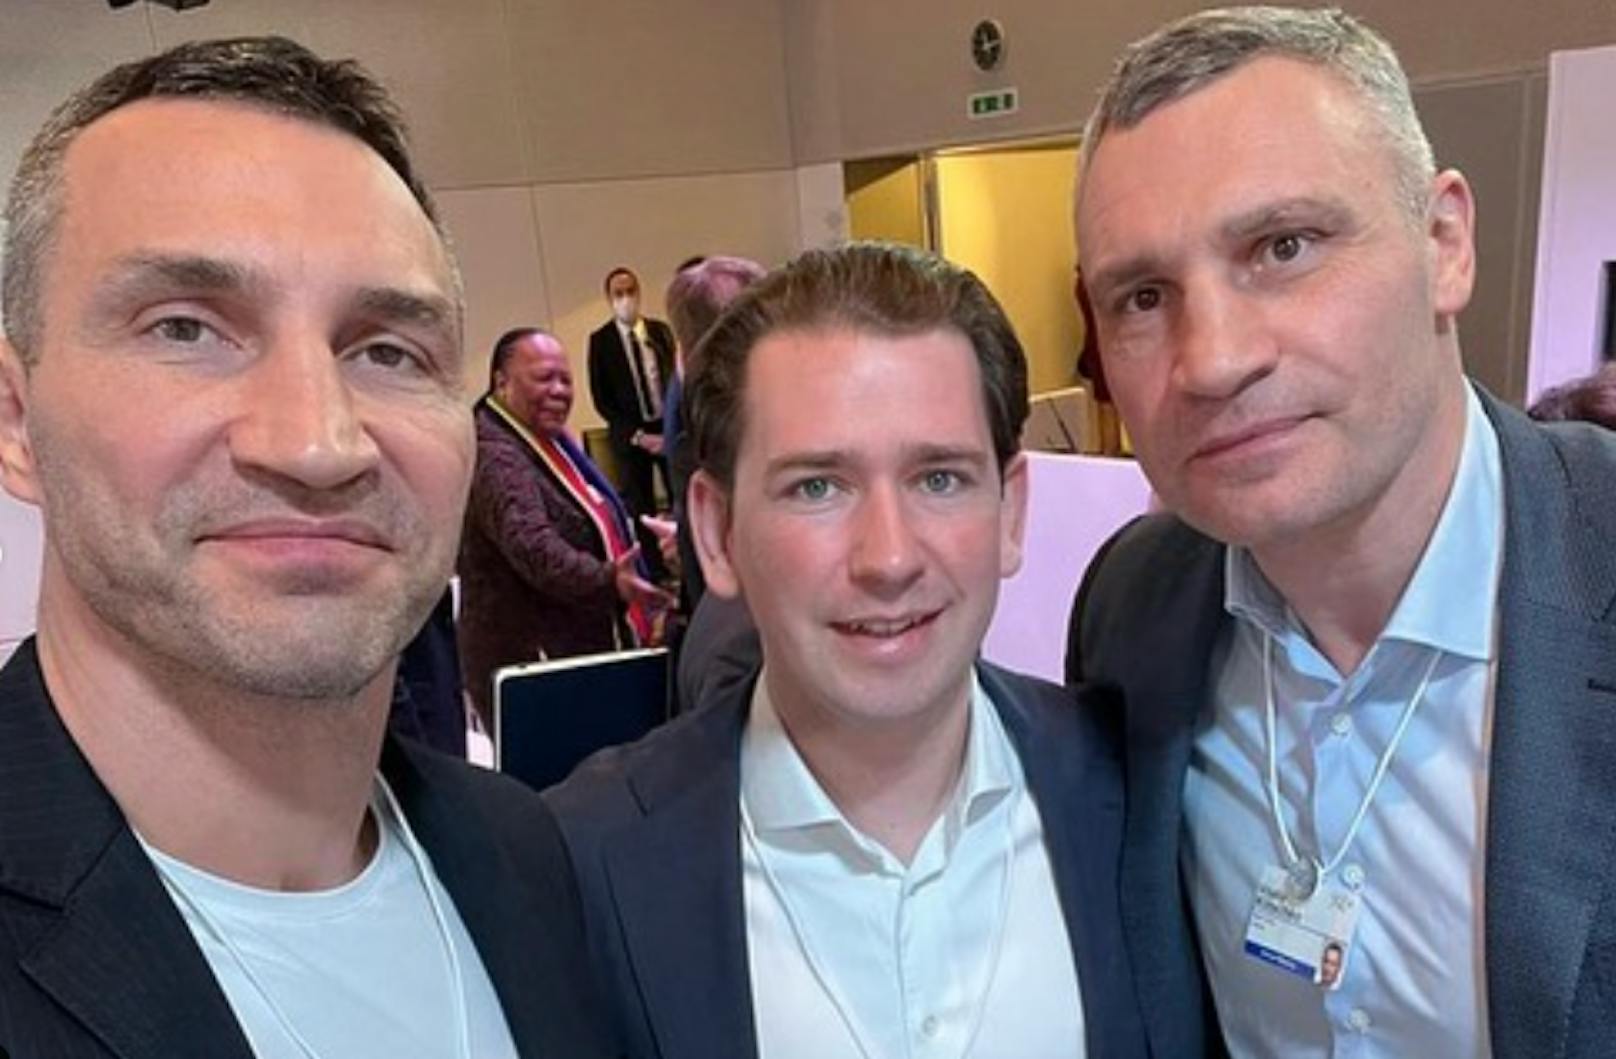 "Freunde": Sebastian Kurz posiert mit Klitschko-Brüdern